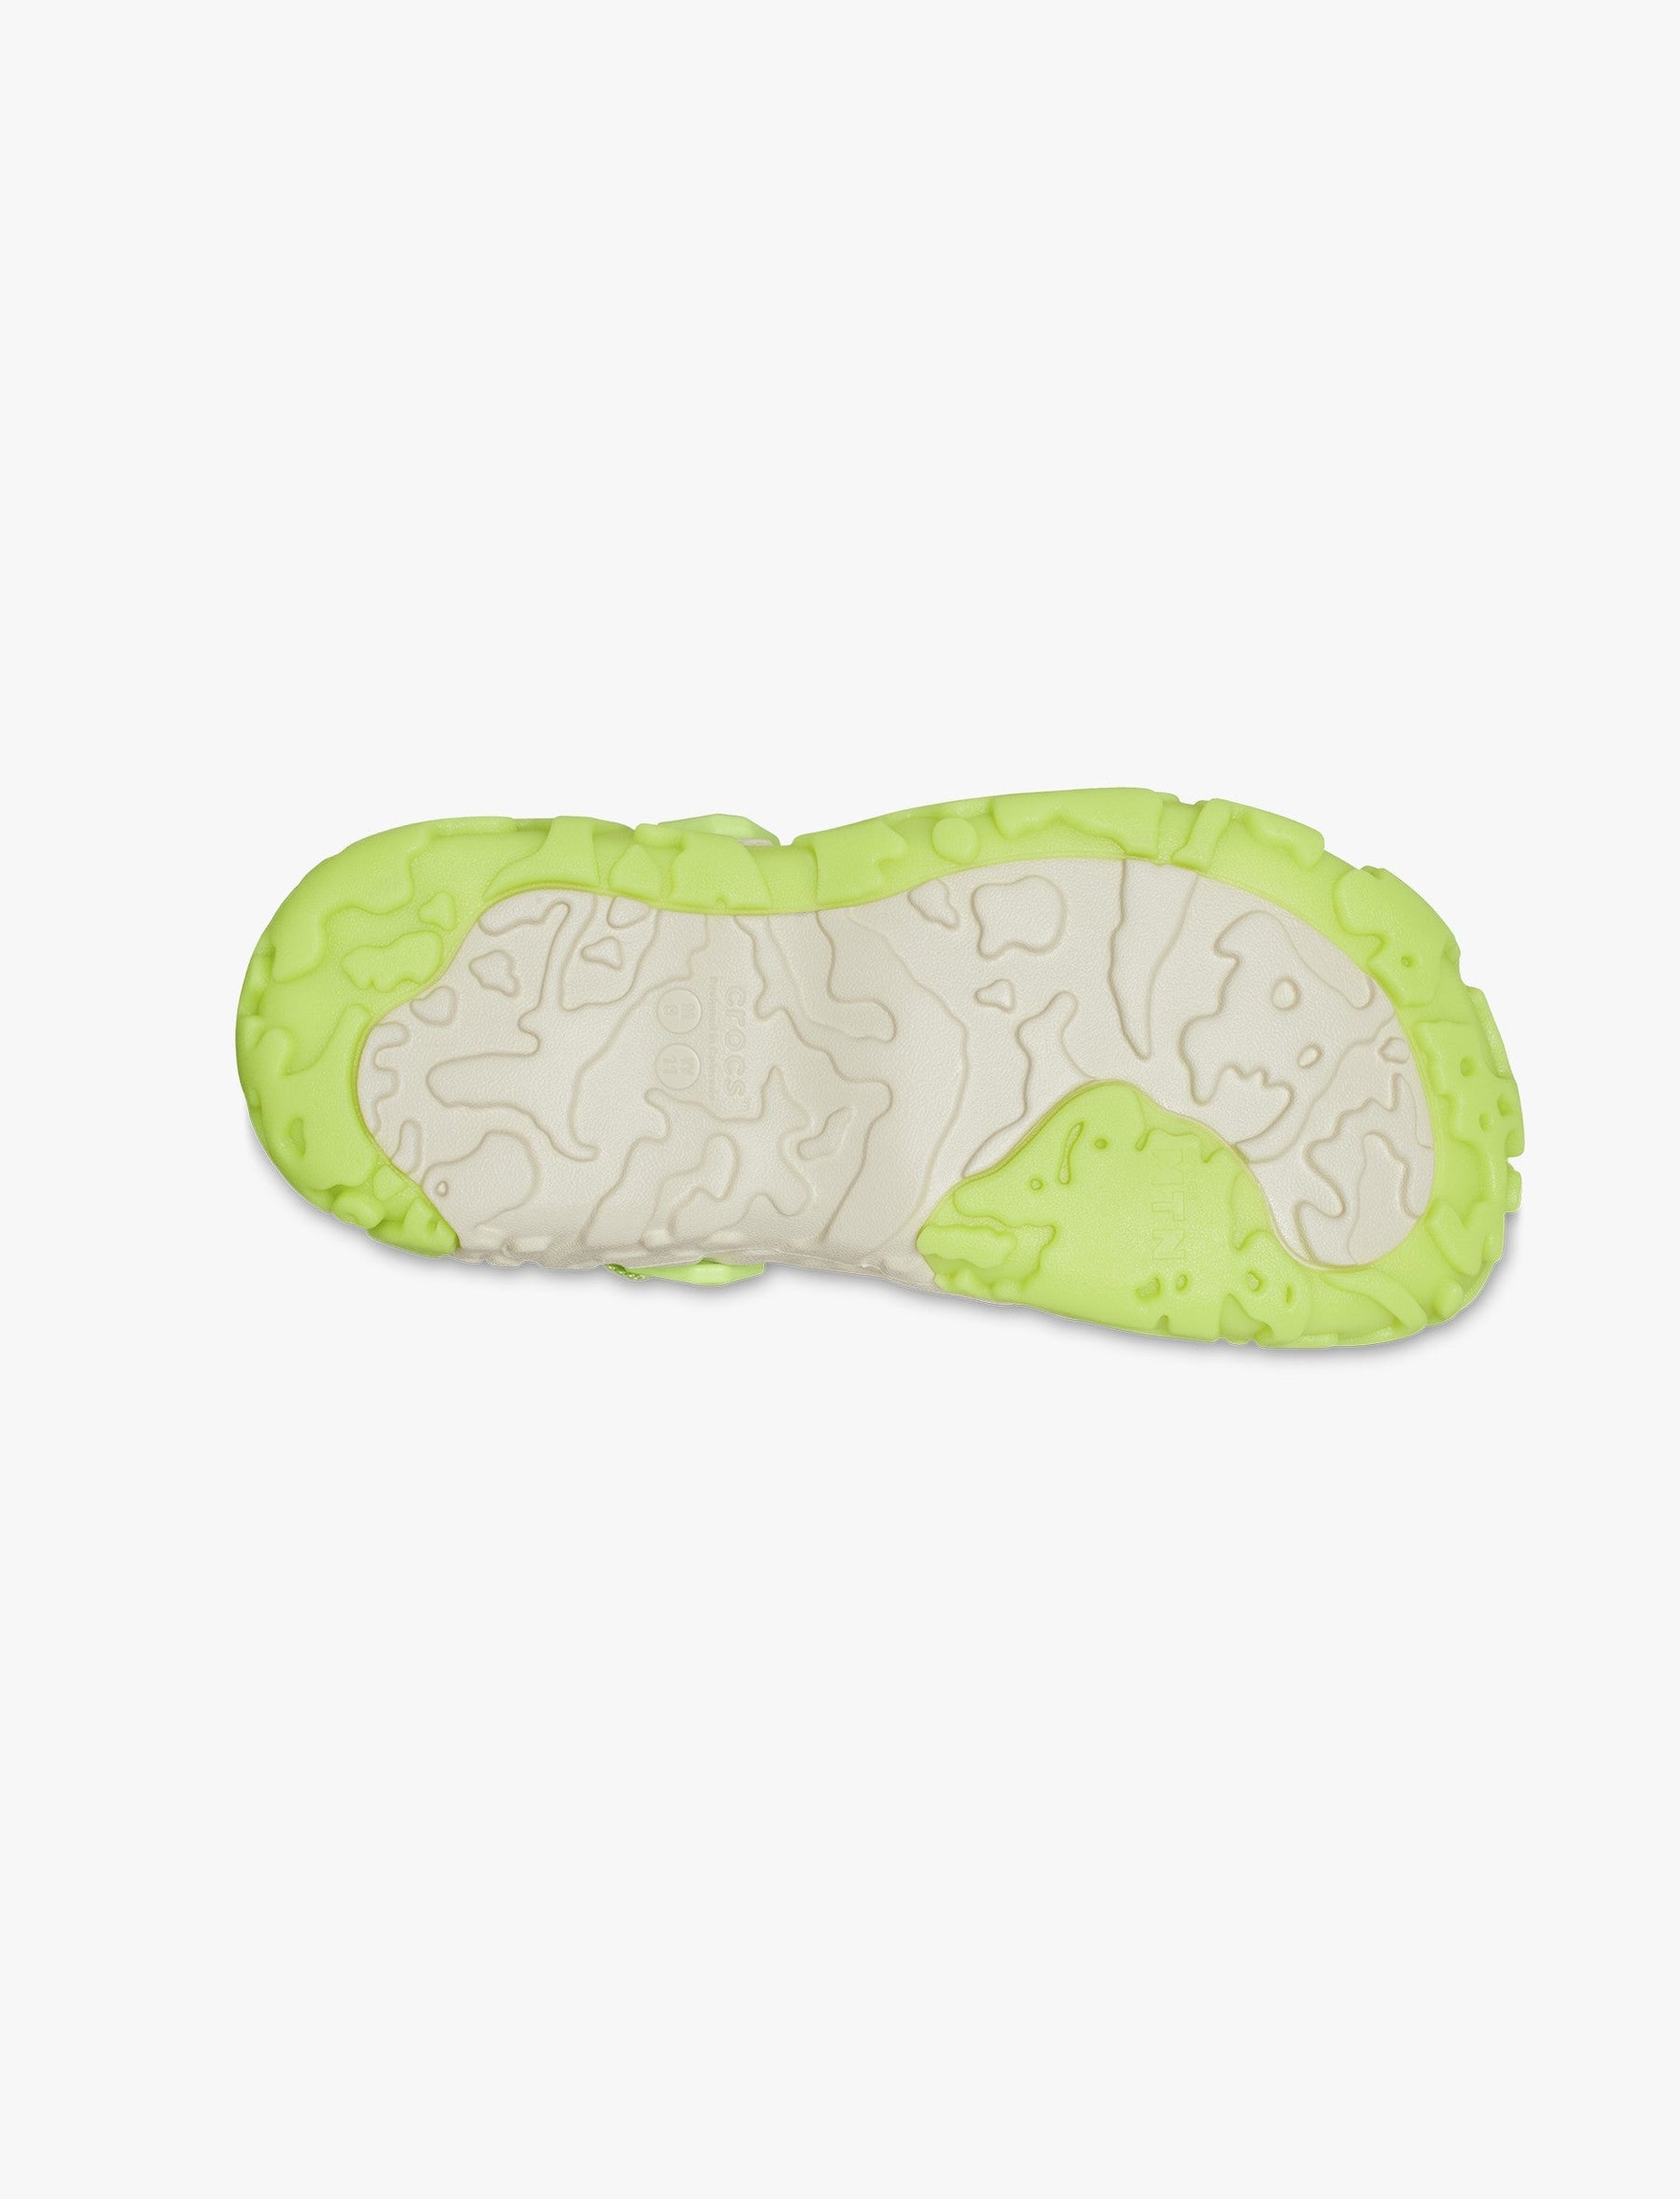 Crocs All-Terrain Atlas Clog - כפכפי קלוג קרוקס אטלס לגברים בצבע בון/ירוק לימונדה-Crocs-43-44-נאקו